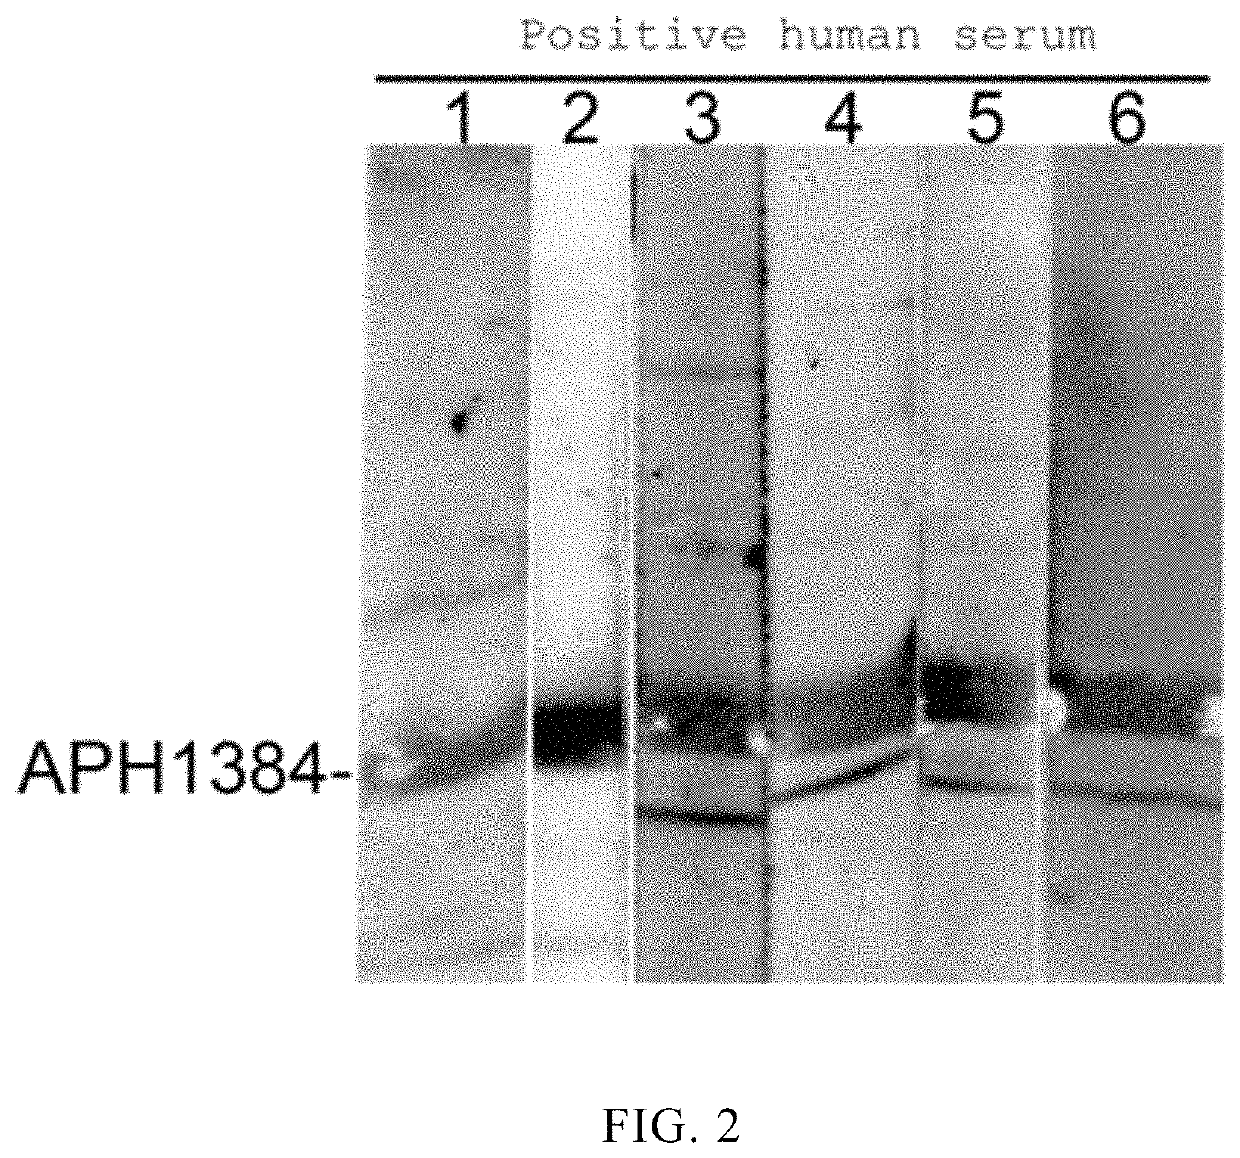 Application of anaplasma phagocytophilum protein APH1384